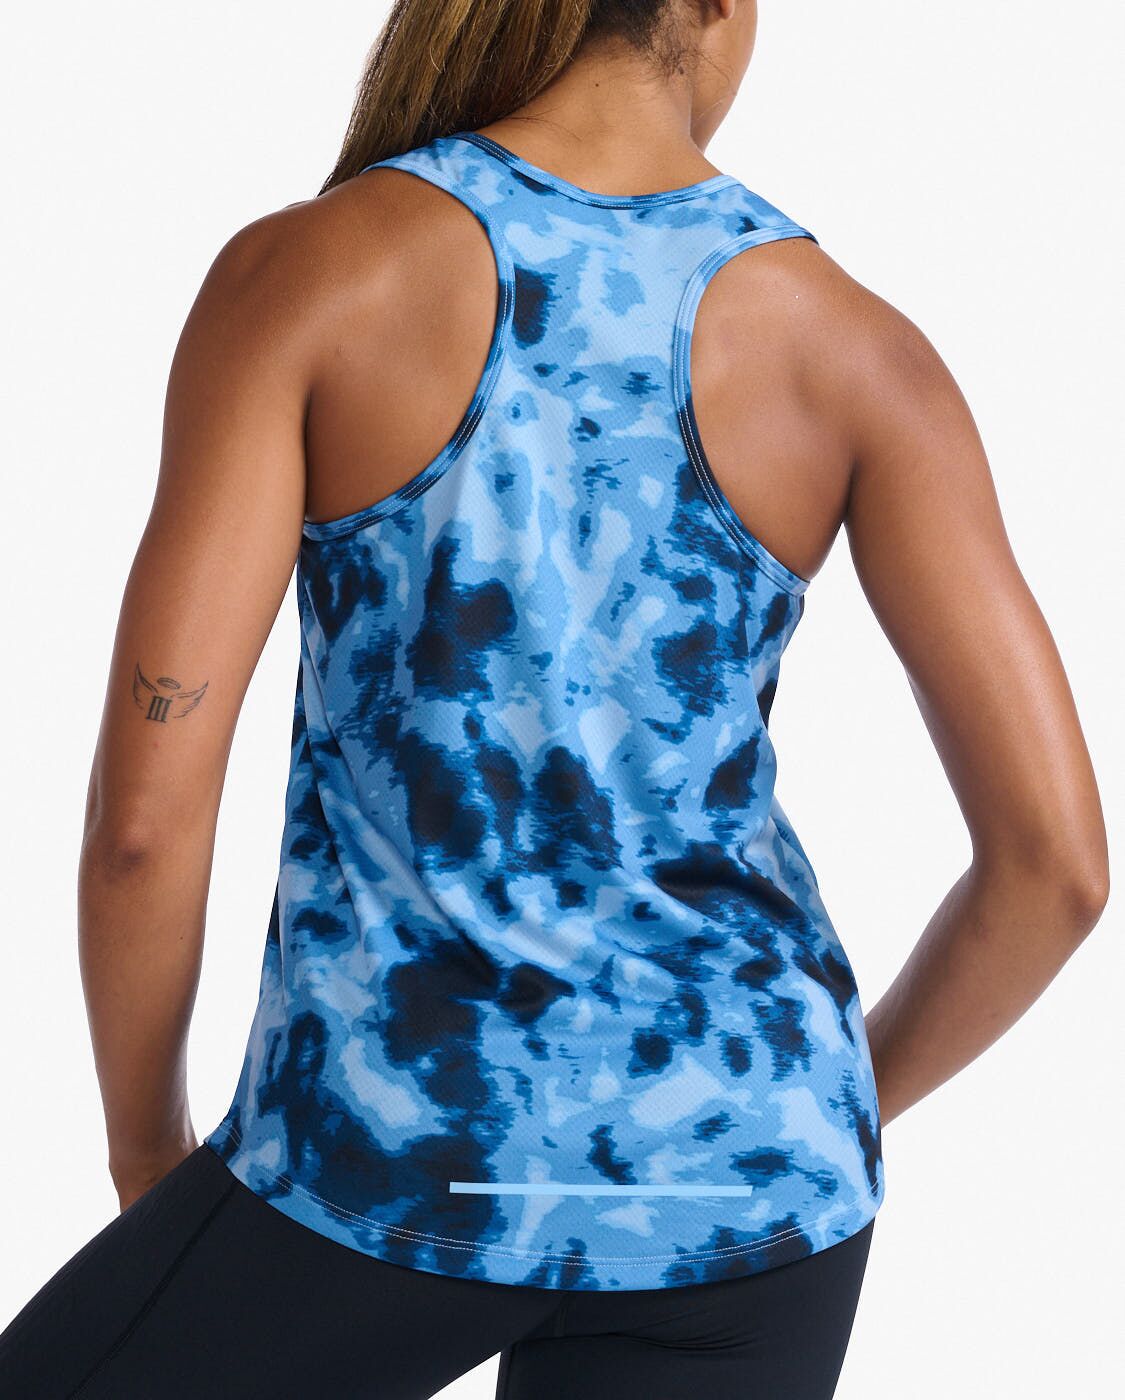 2XU South Africa - Women's Light Speed Running Vest - Digital Dye/Mirage Reflective